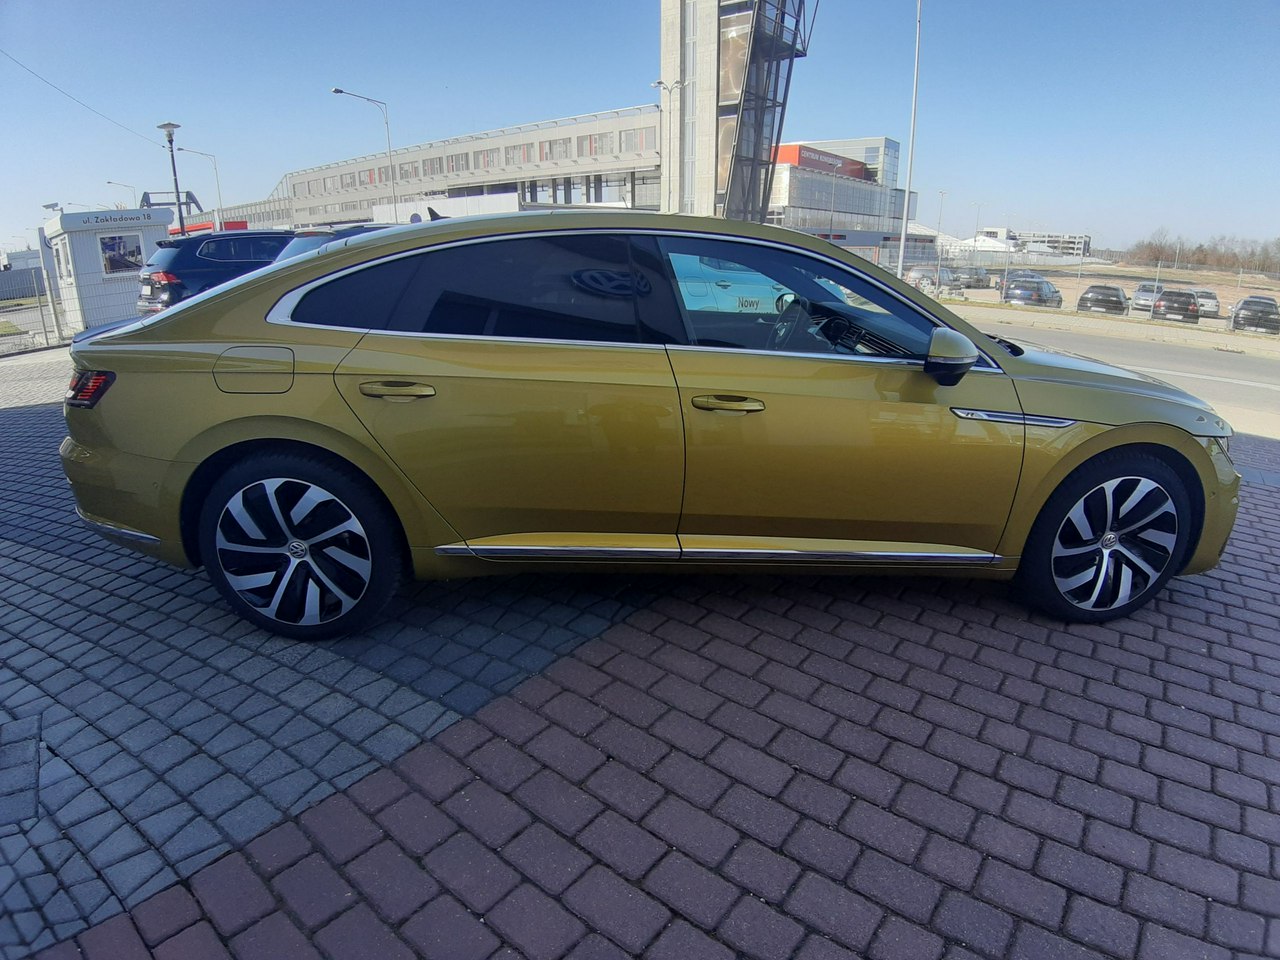 Volkswagen Arteon 190 KM, rok produkcji 2019, oferta AKL16MXKF